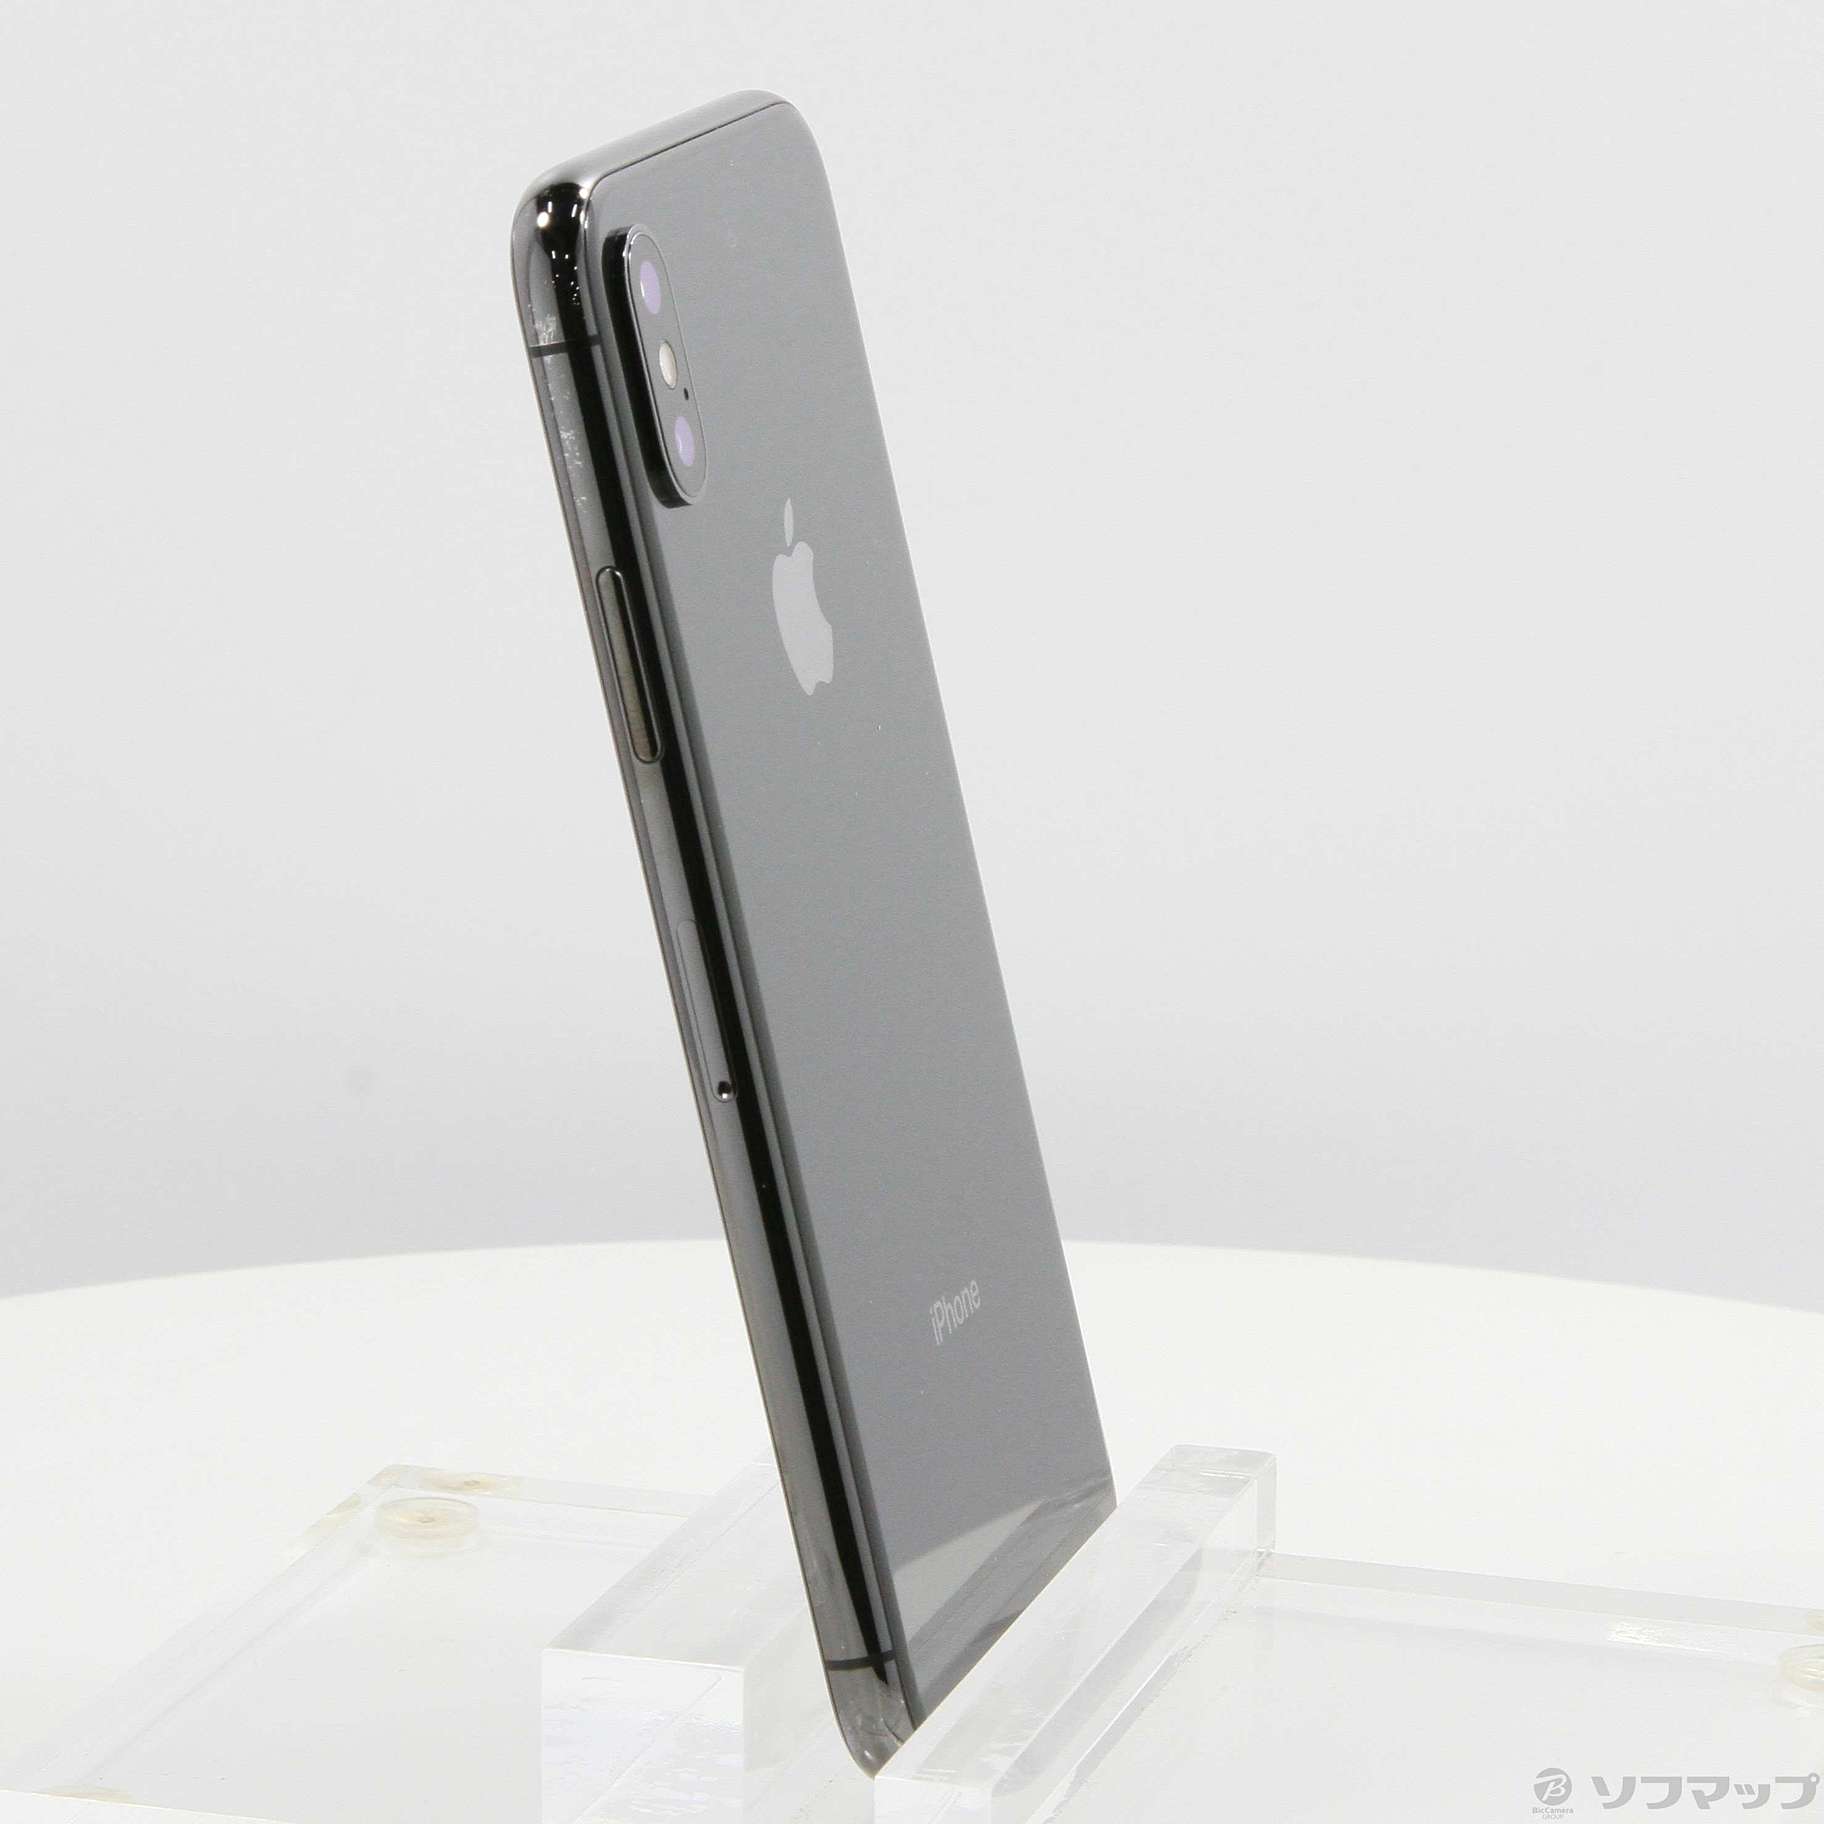 iPhoneX 256GB SIMフリー スペースグレー MQC12J/A